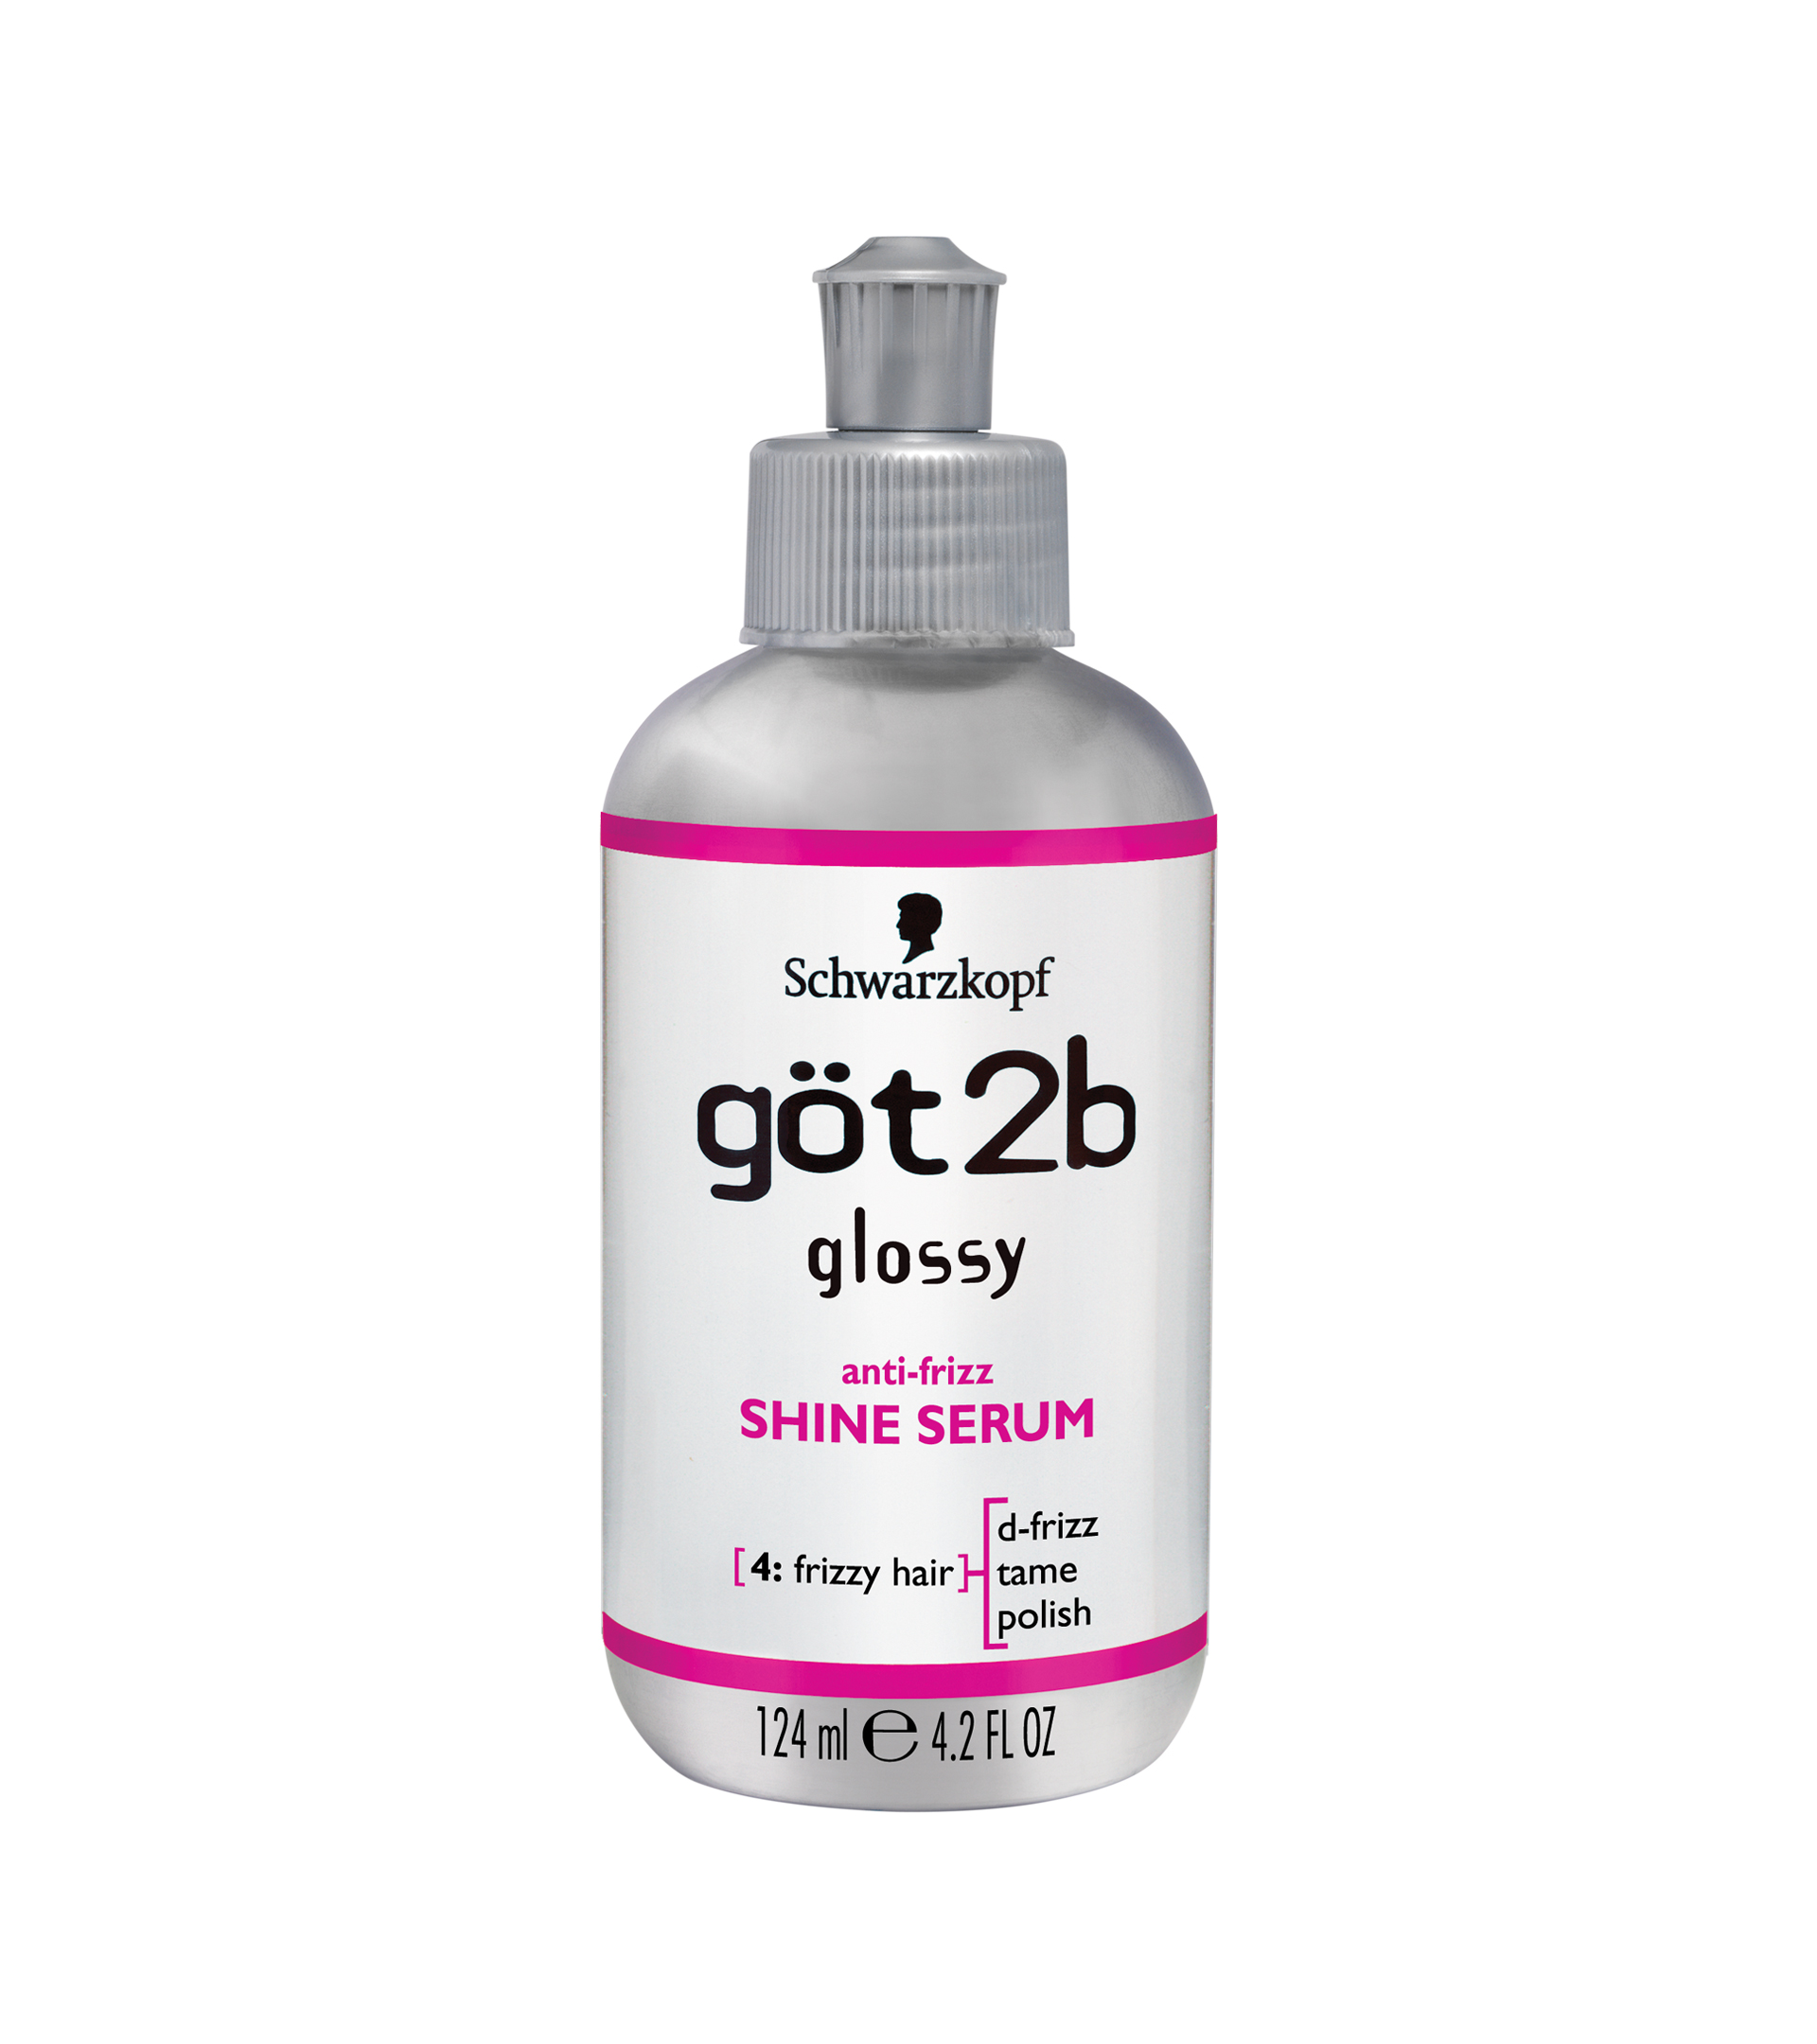 B-glossy body serum reviews